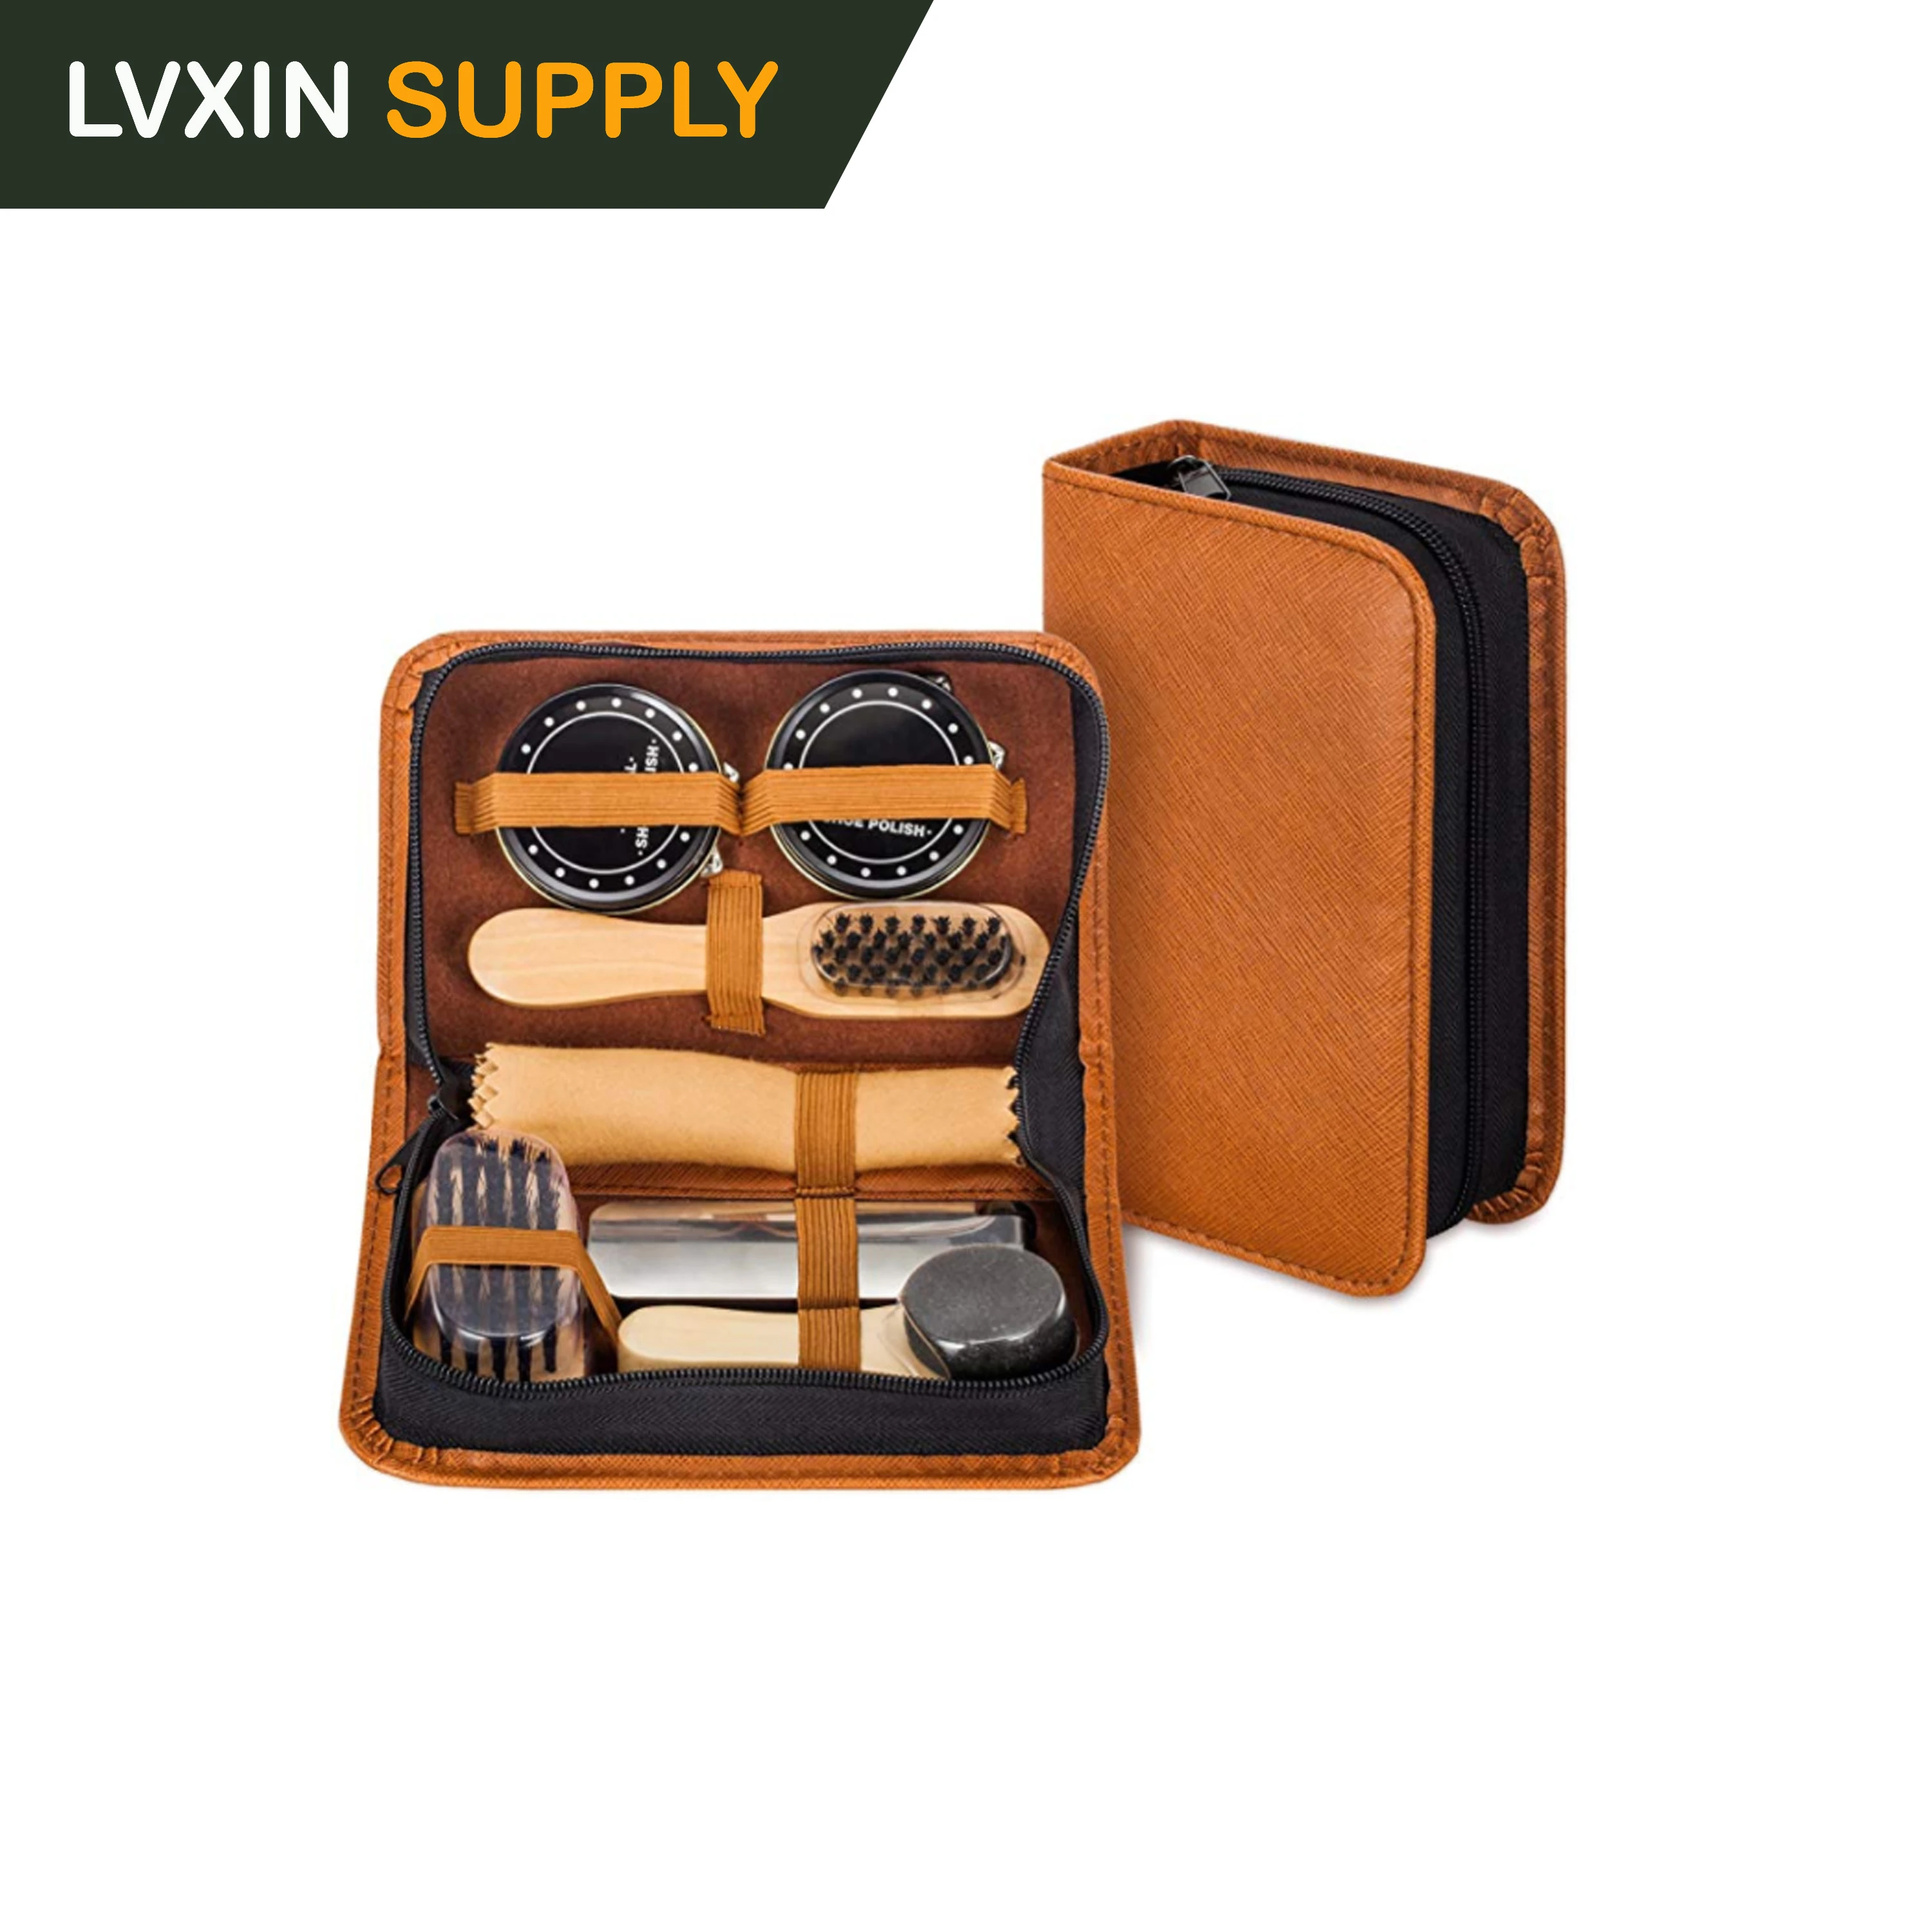 Premium Quality 7 Piece Brush Polish Shoe Care Set with PU Leather Luxury Case